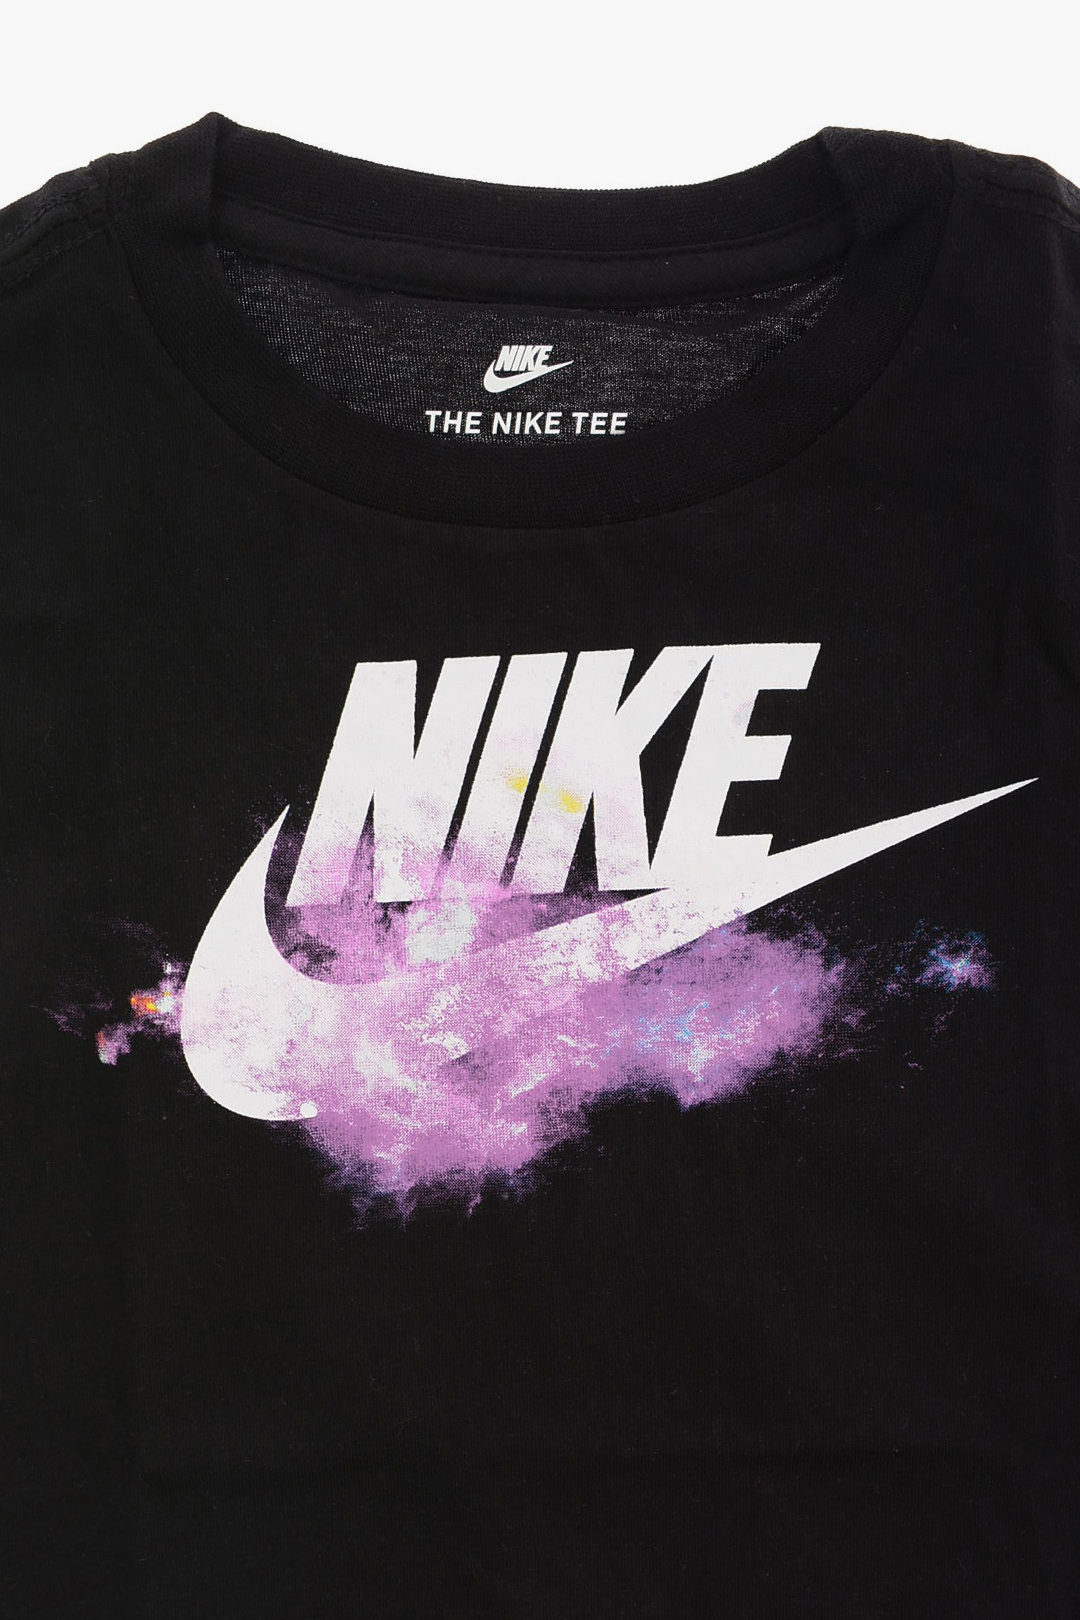 Nike Galaxy Shirt - galaxy roblox nike shirt